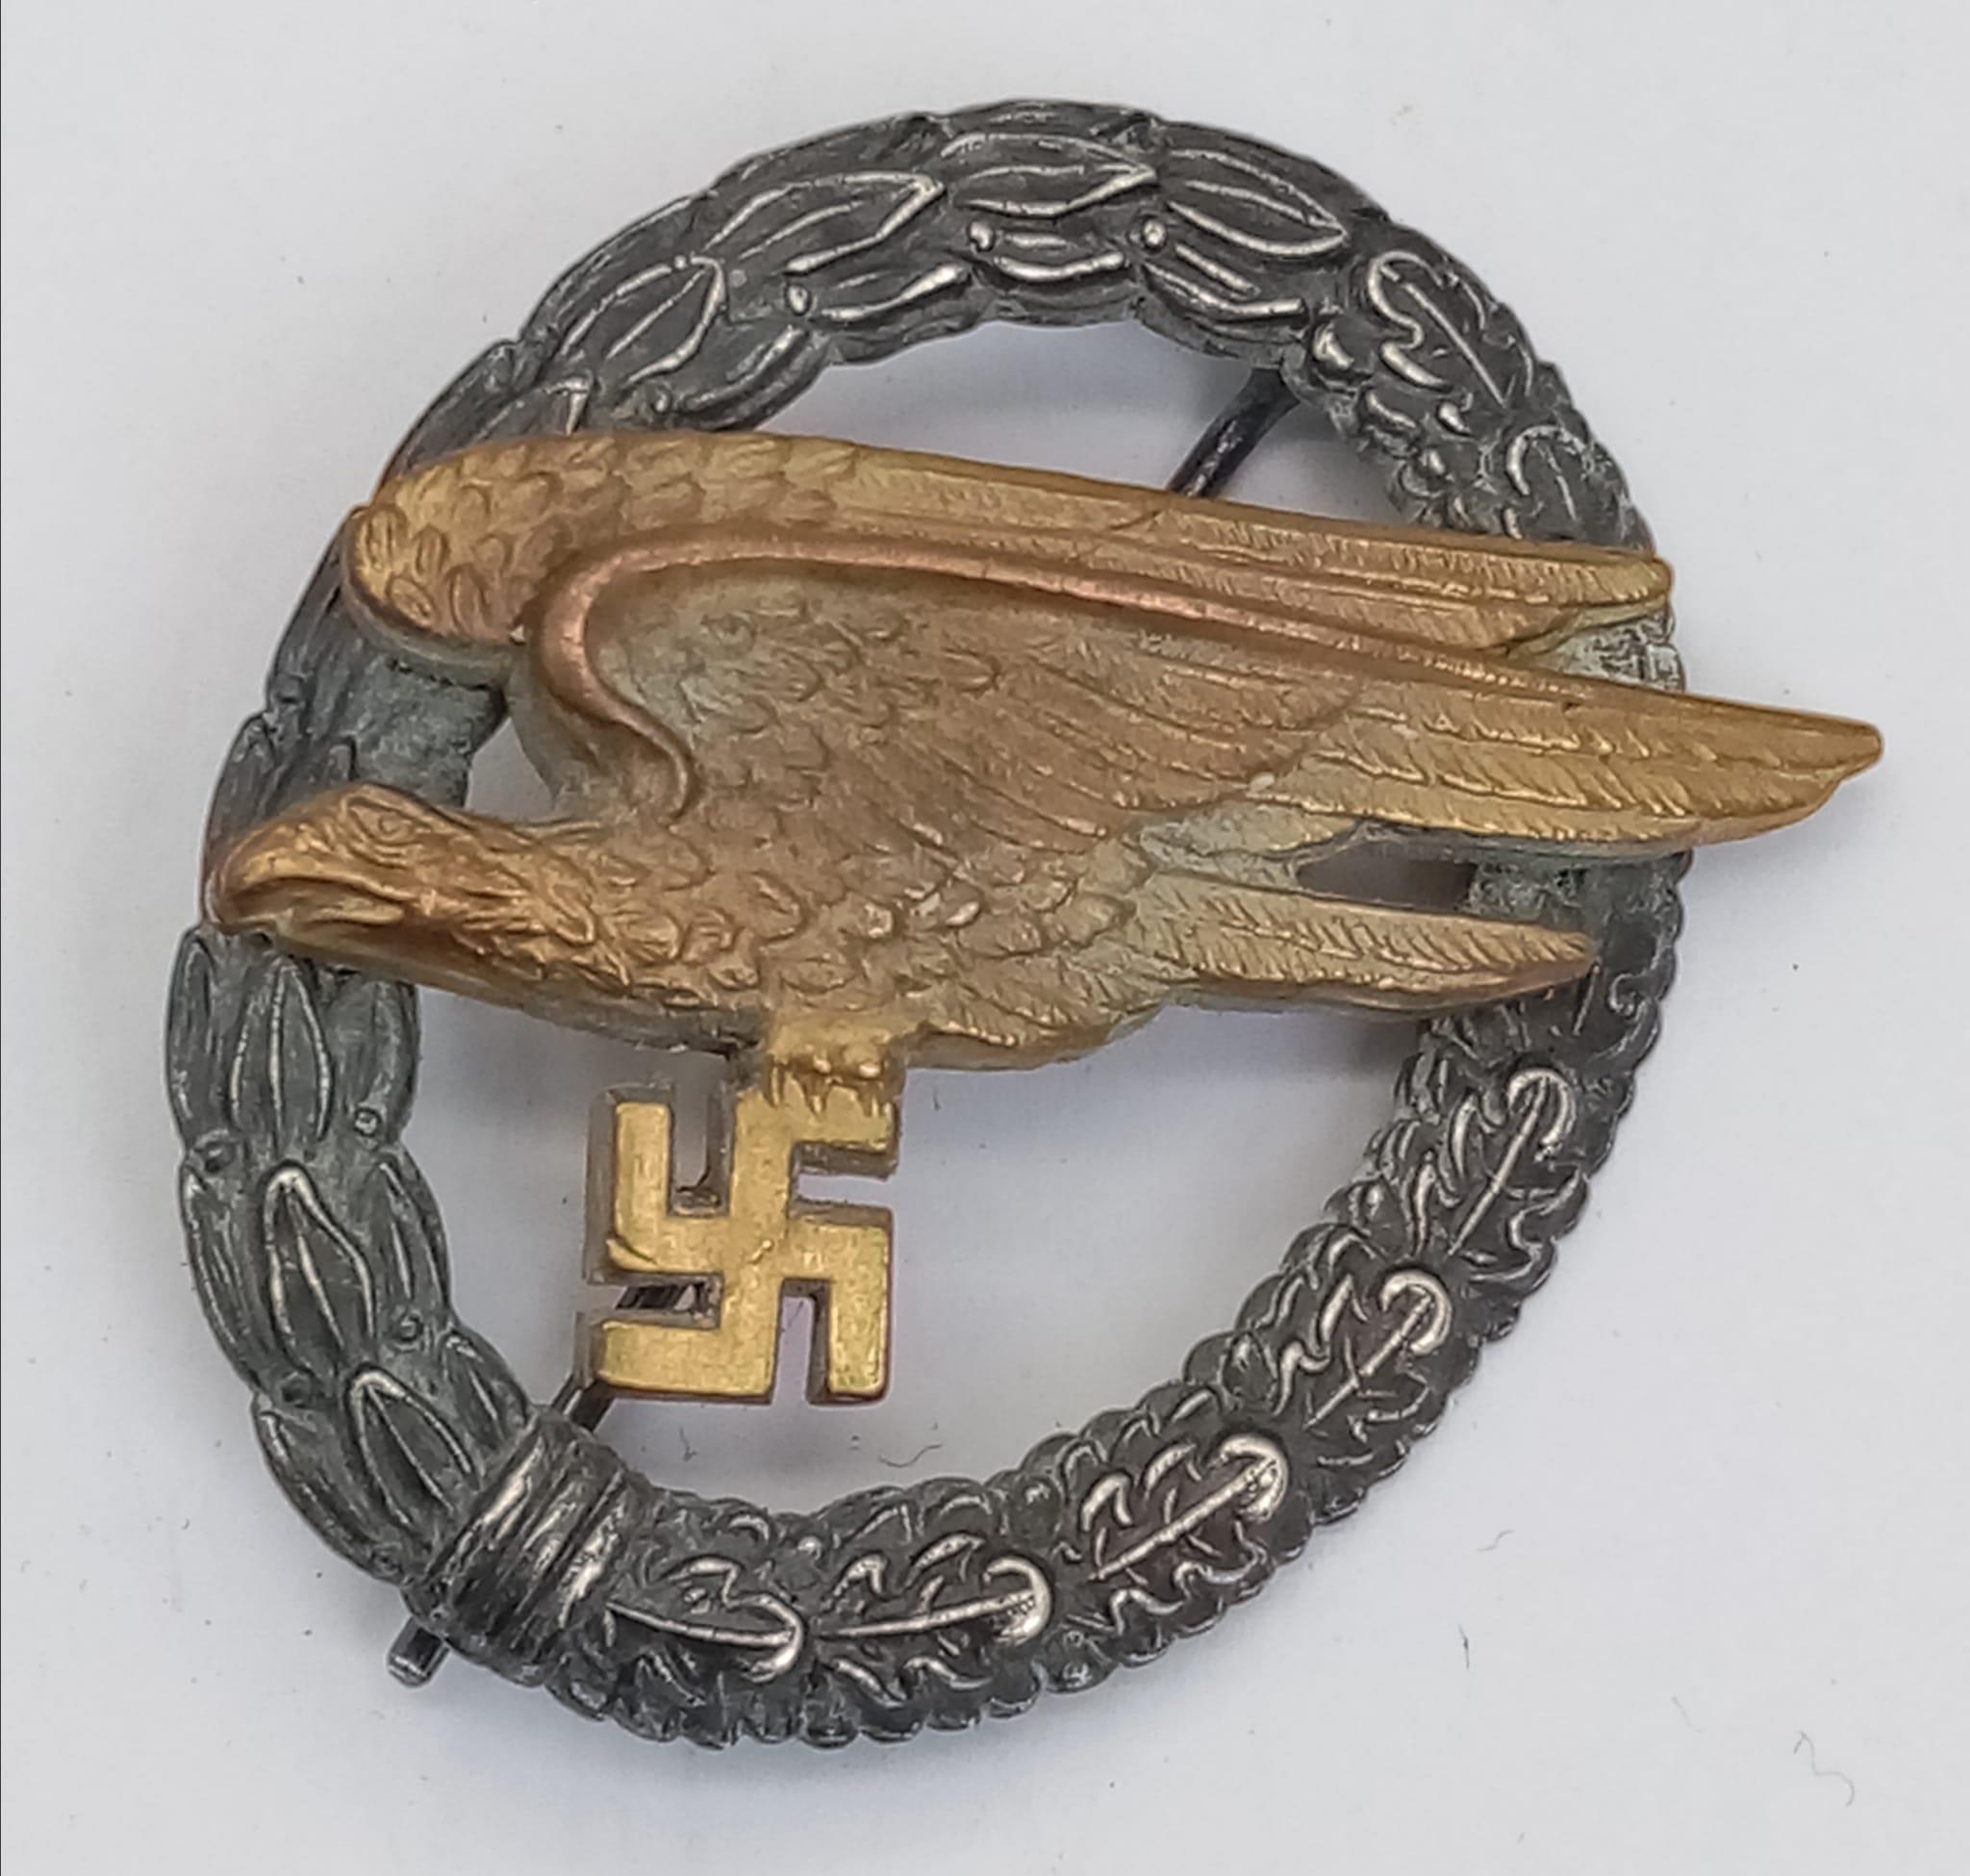 WW2 German Fallschirmjäger (Paratrooper) Qualification Badge. Maker: G.H. Osang Dresden.